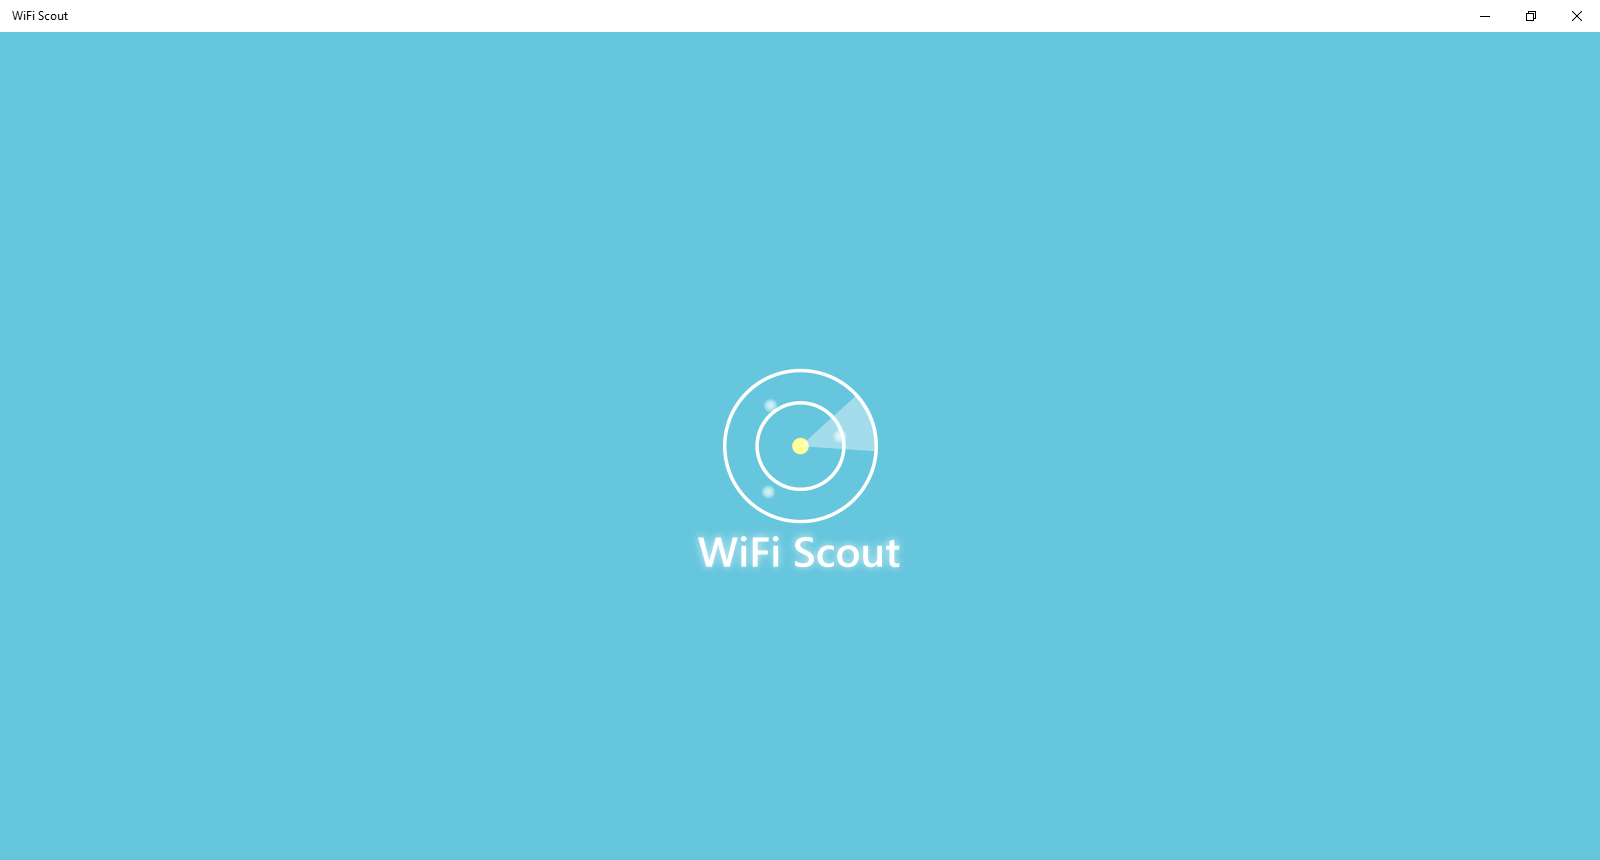 WiFi Scout